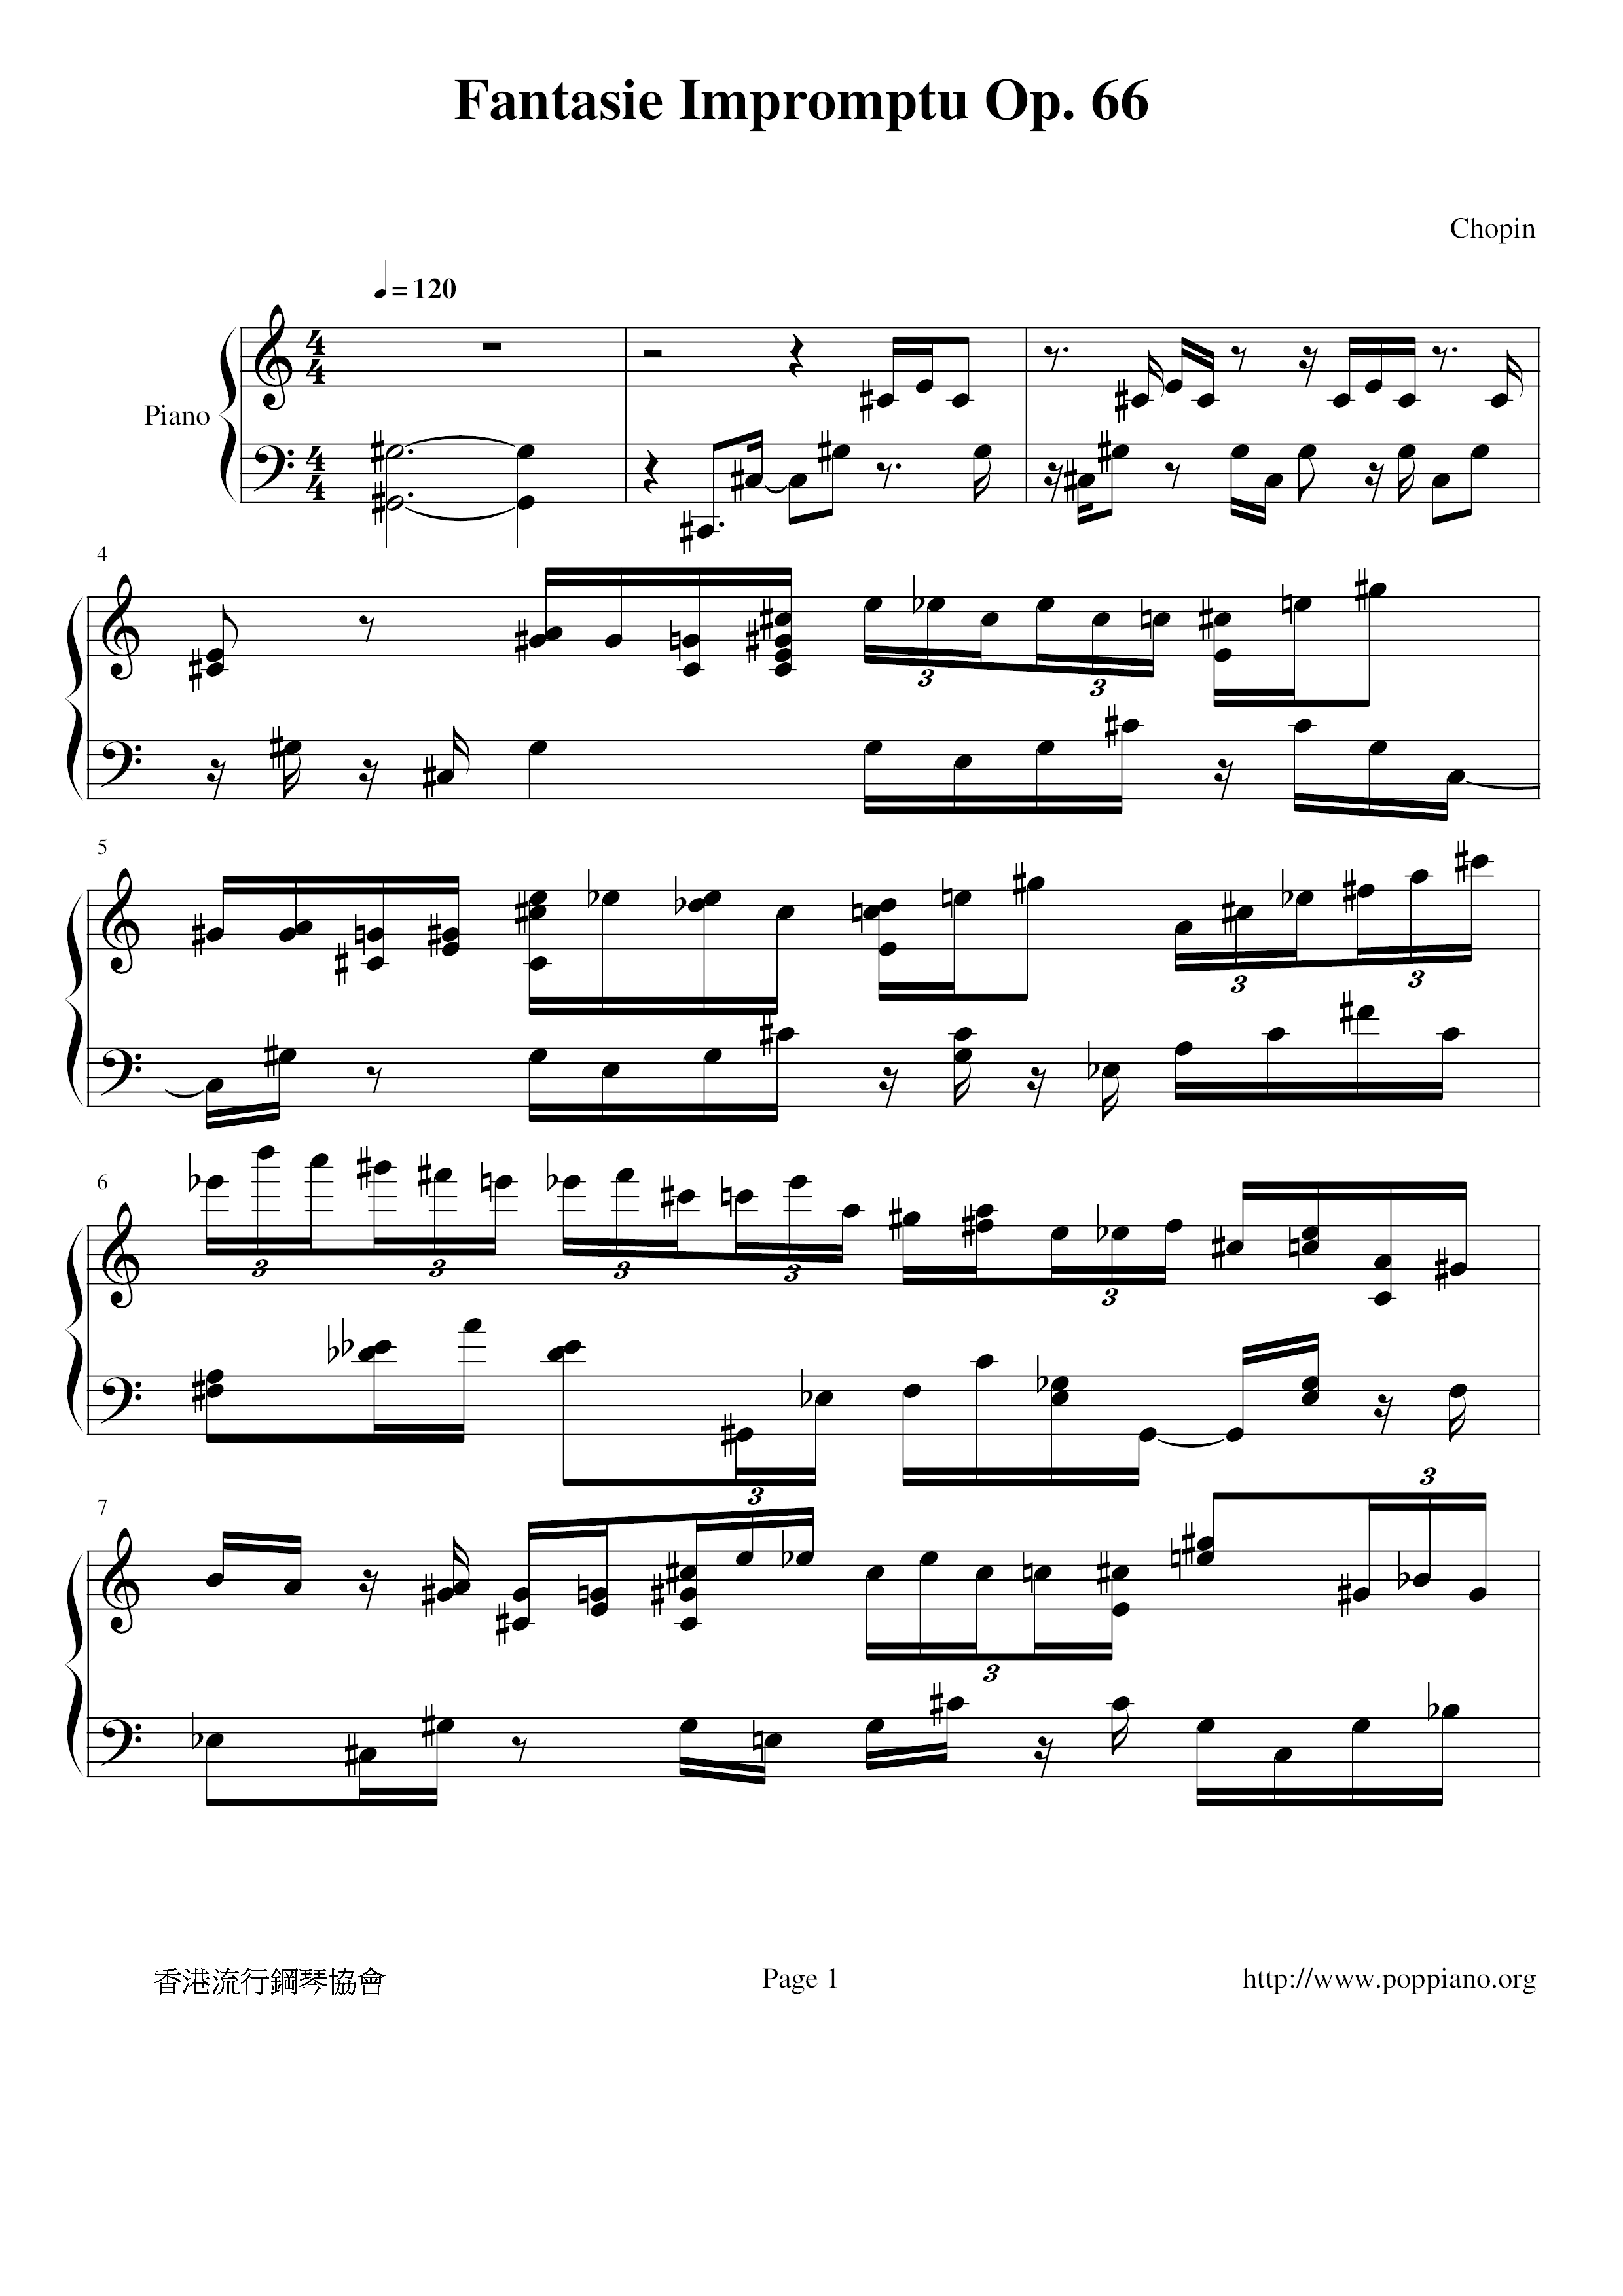 Fantasie Impromptu Op. 66 即兴幻想曲琴谱